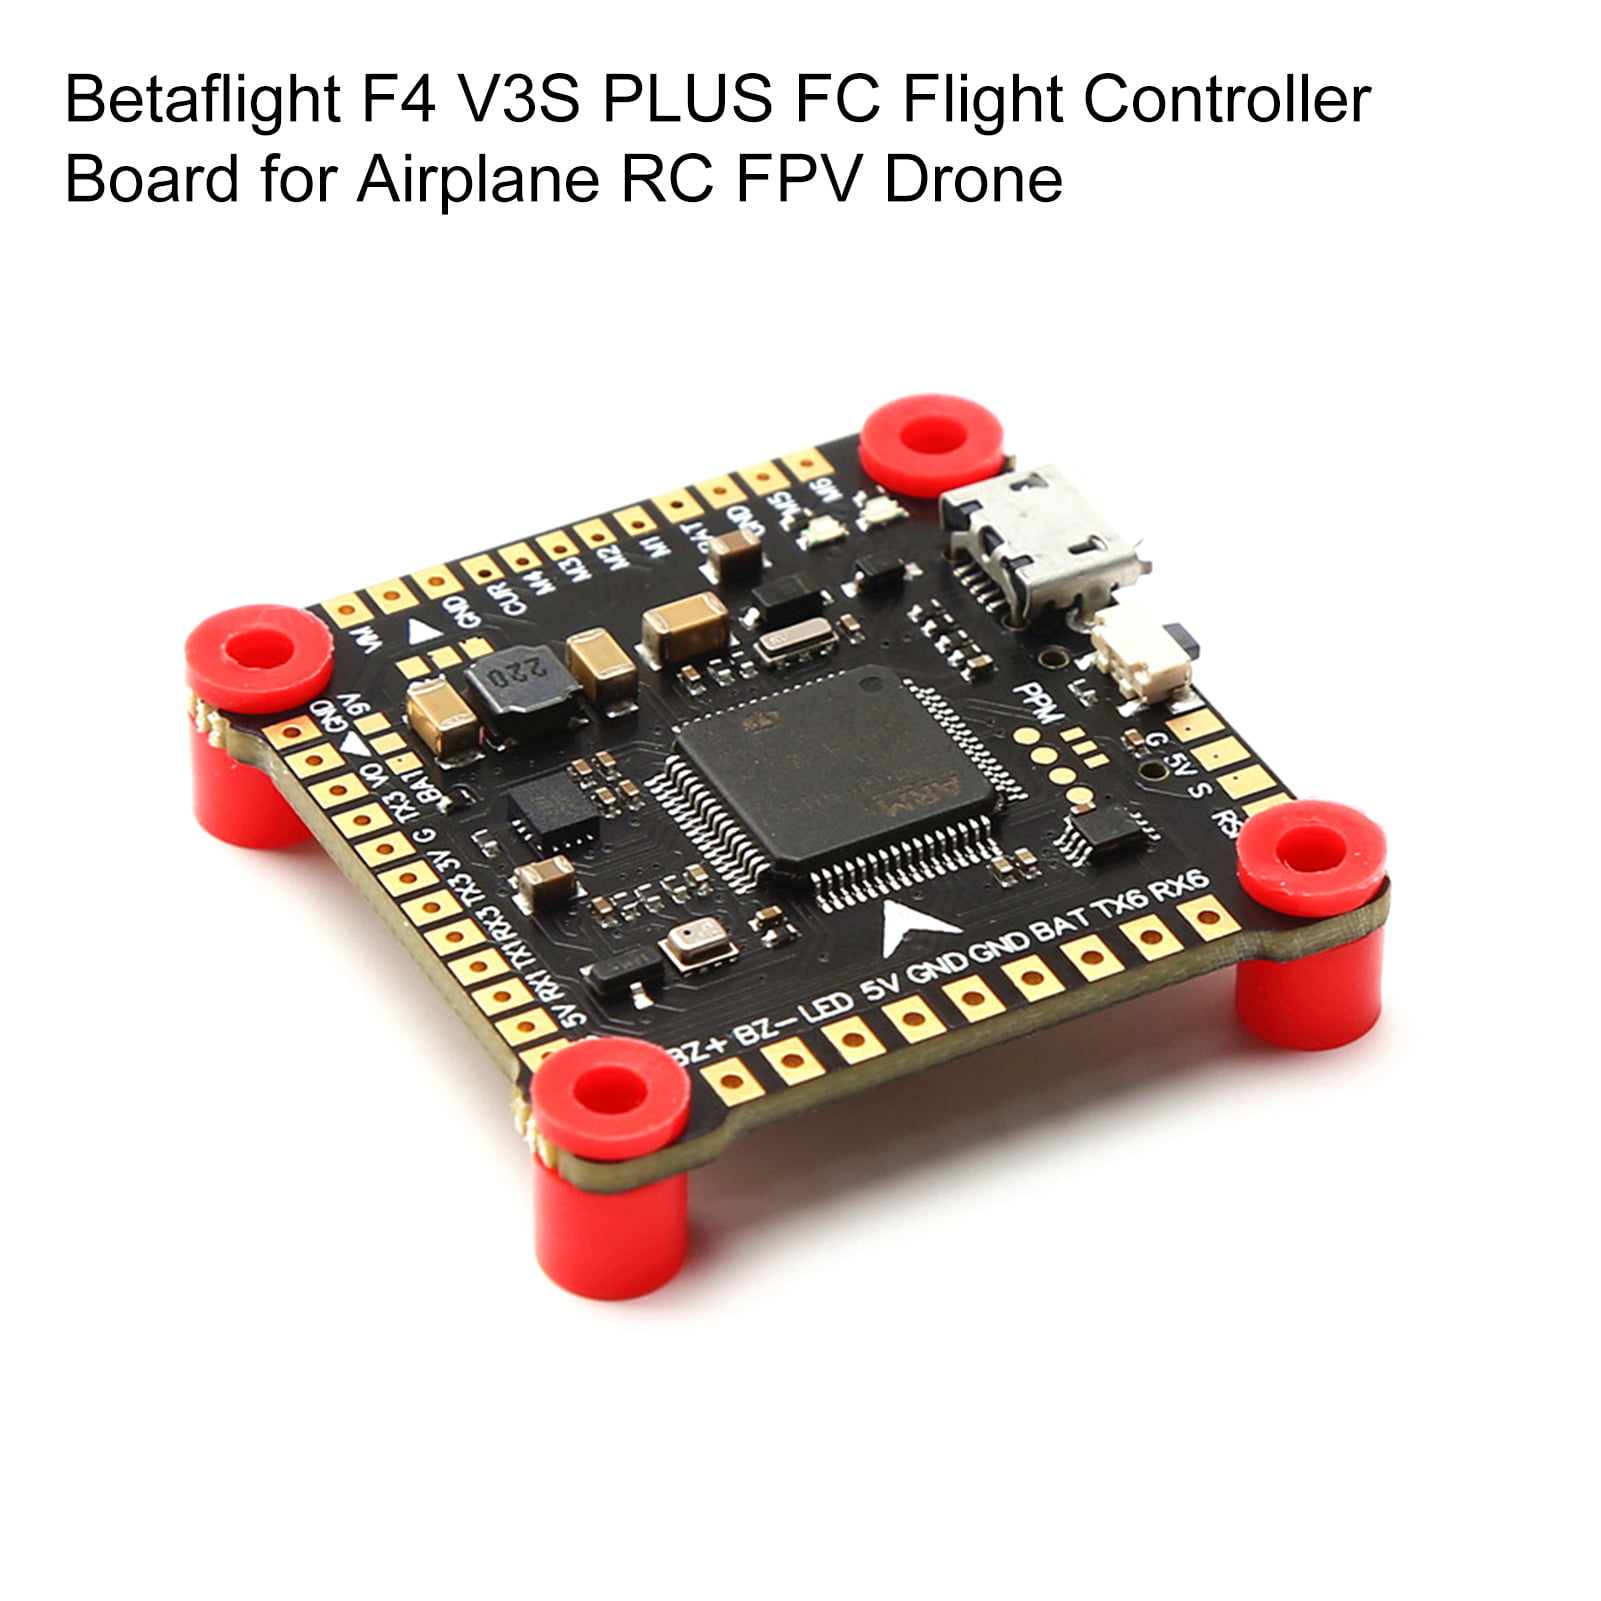 Betaflight F4 V3S PLUS FC for FPV Drone